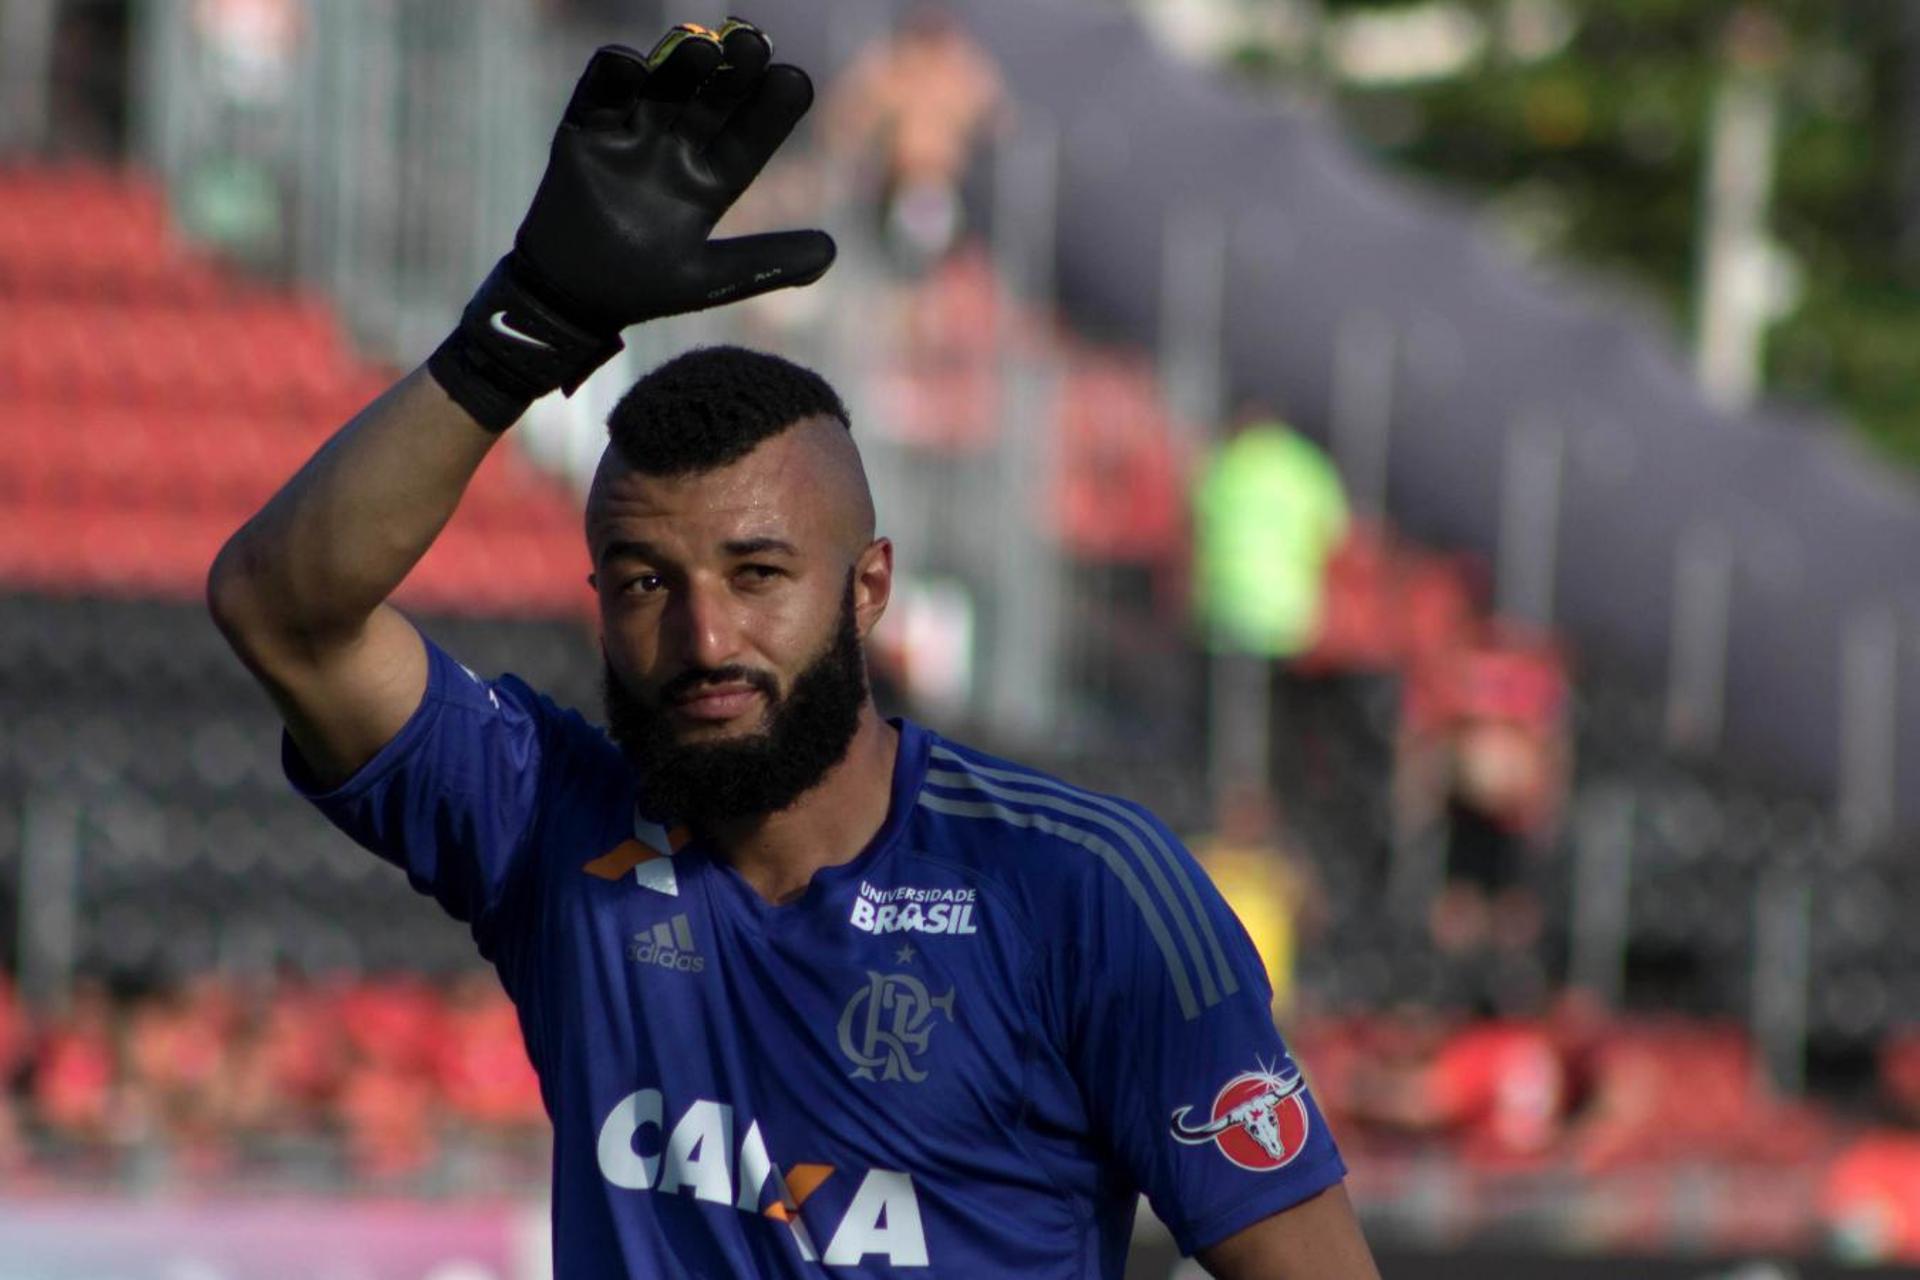 Muralha vive momento decisivo no Flamengo